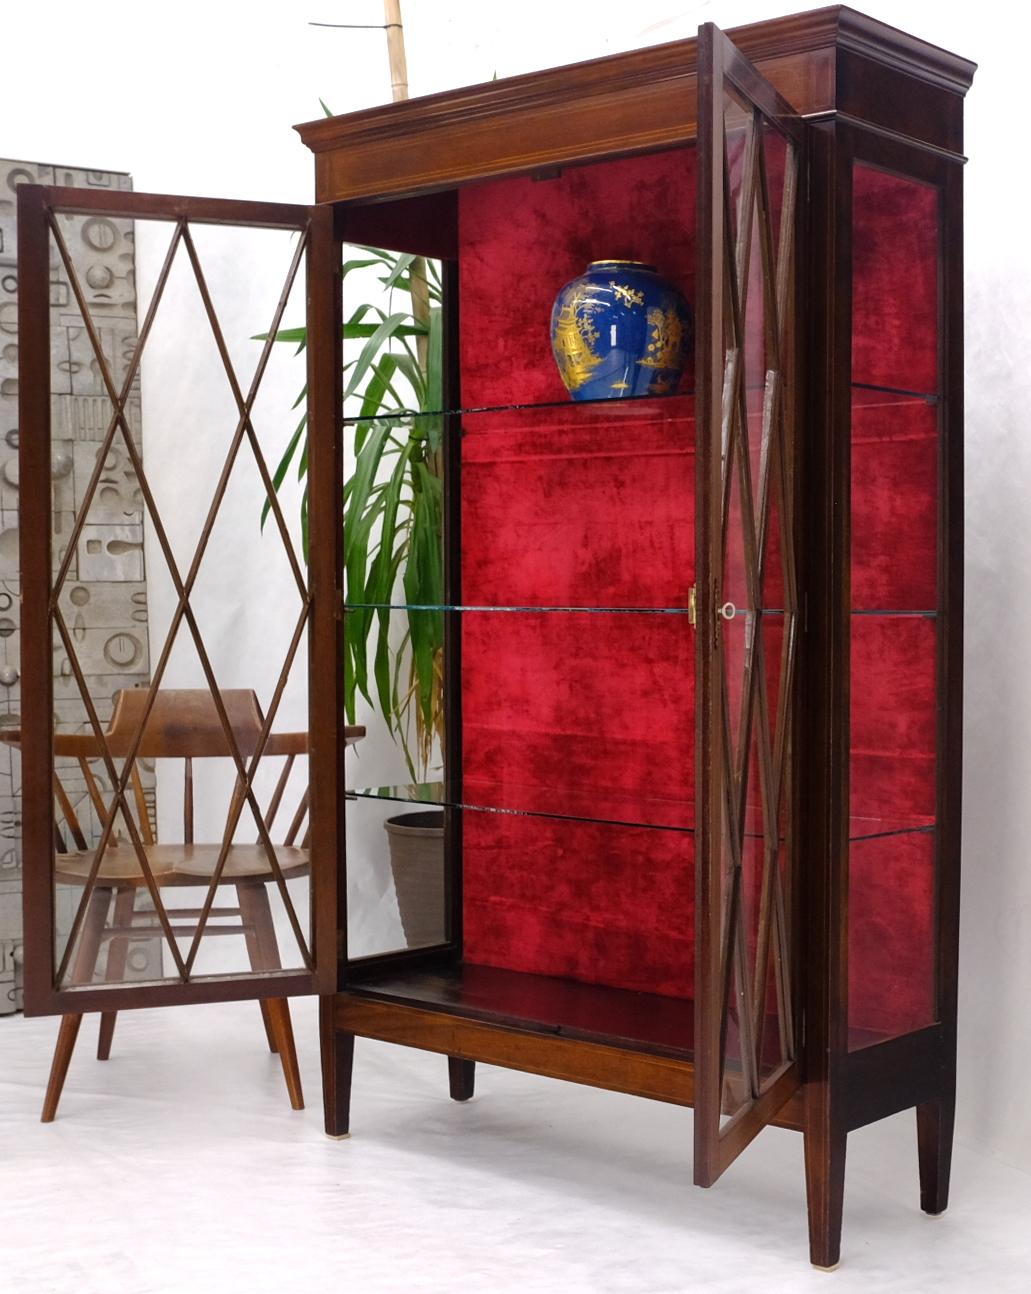 C. 1920s flame mahogany individual glass panes double doors display cabinet curio showcase.